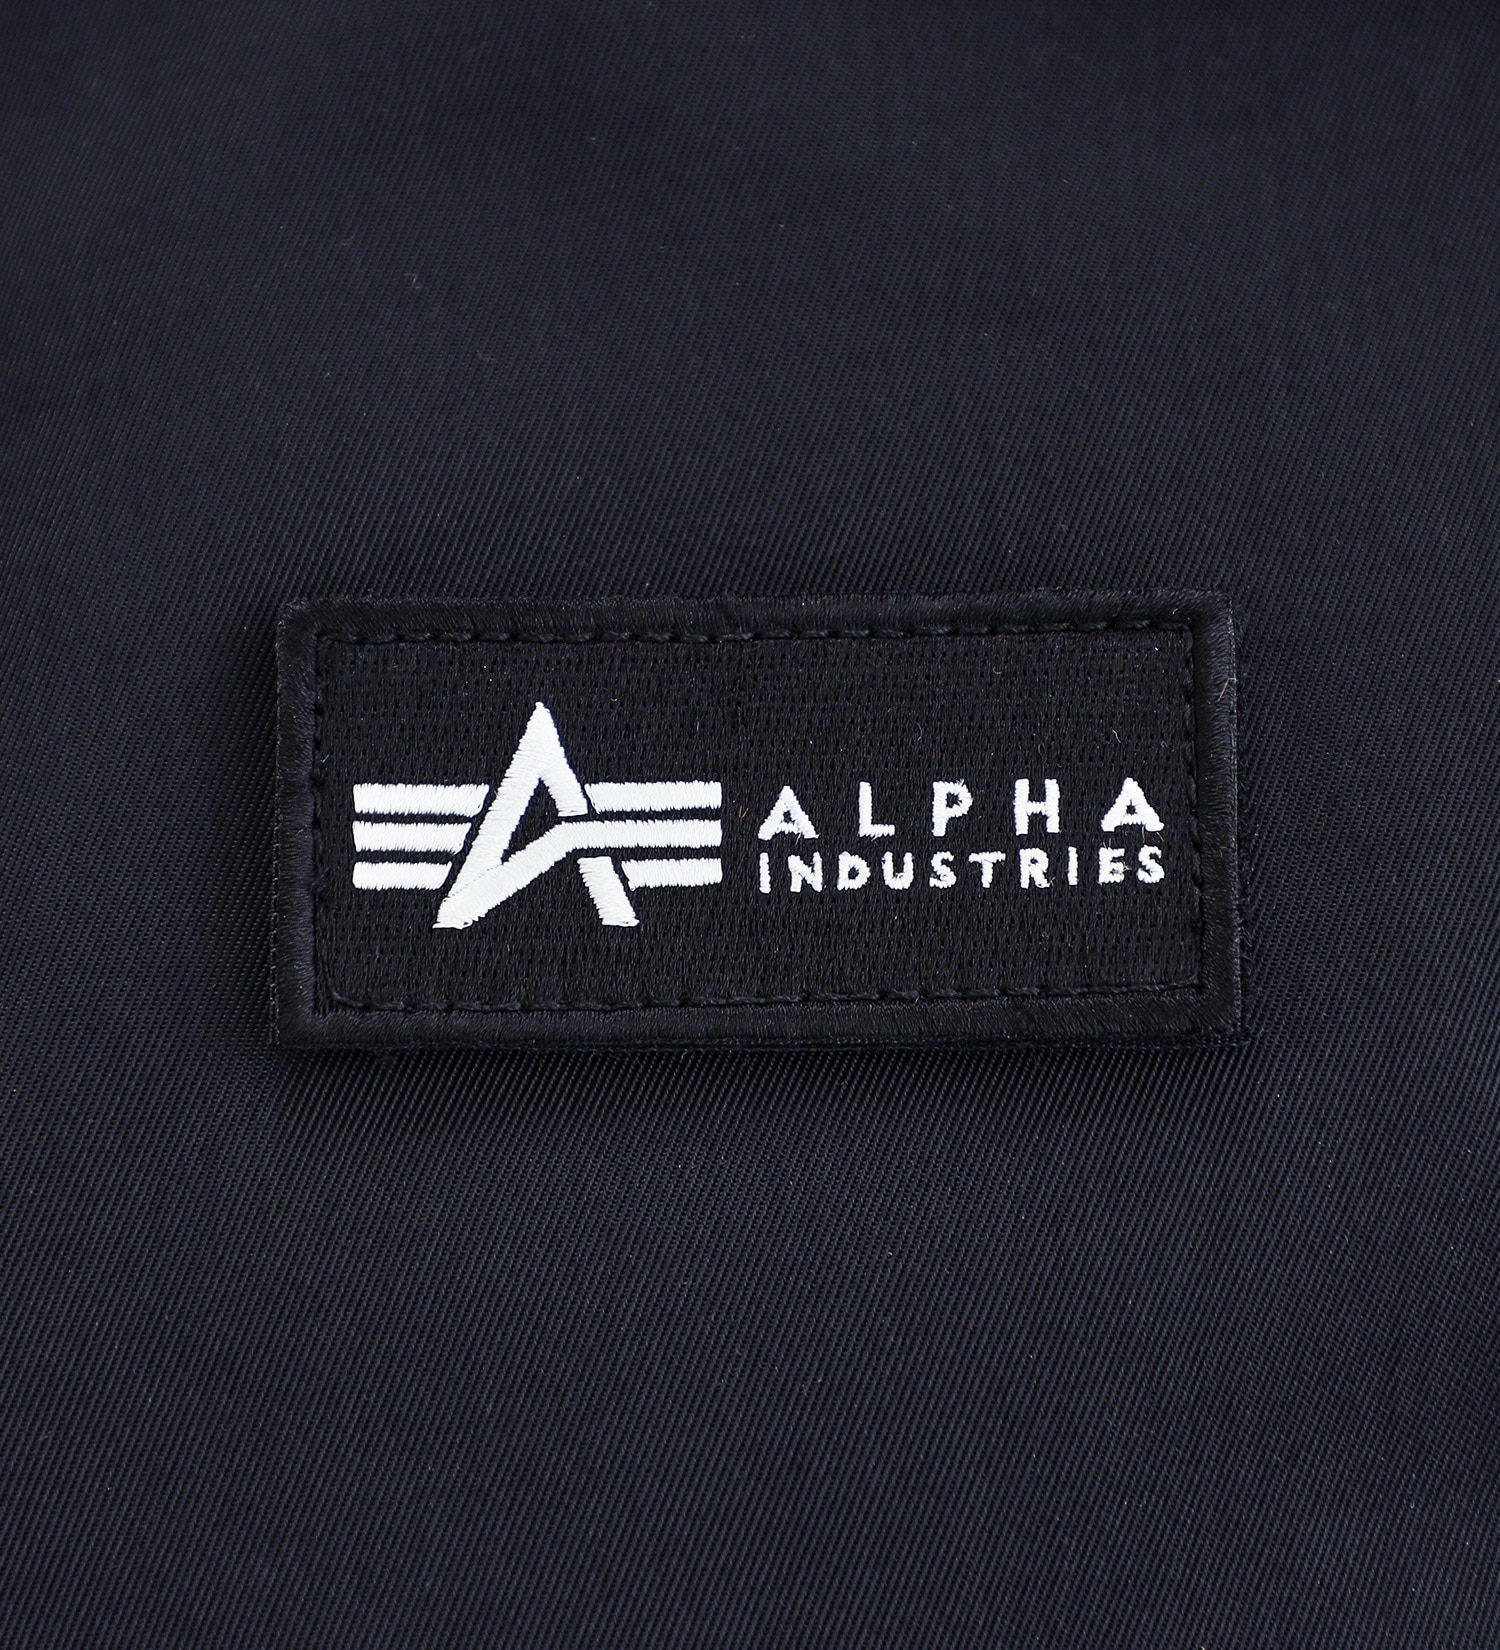 ALPHA(アルファ)のデイパック 20L(リュックサック)|バッグ/バックパック/リュック/メンズ|ブラック